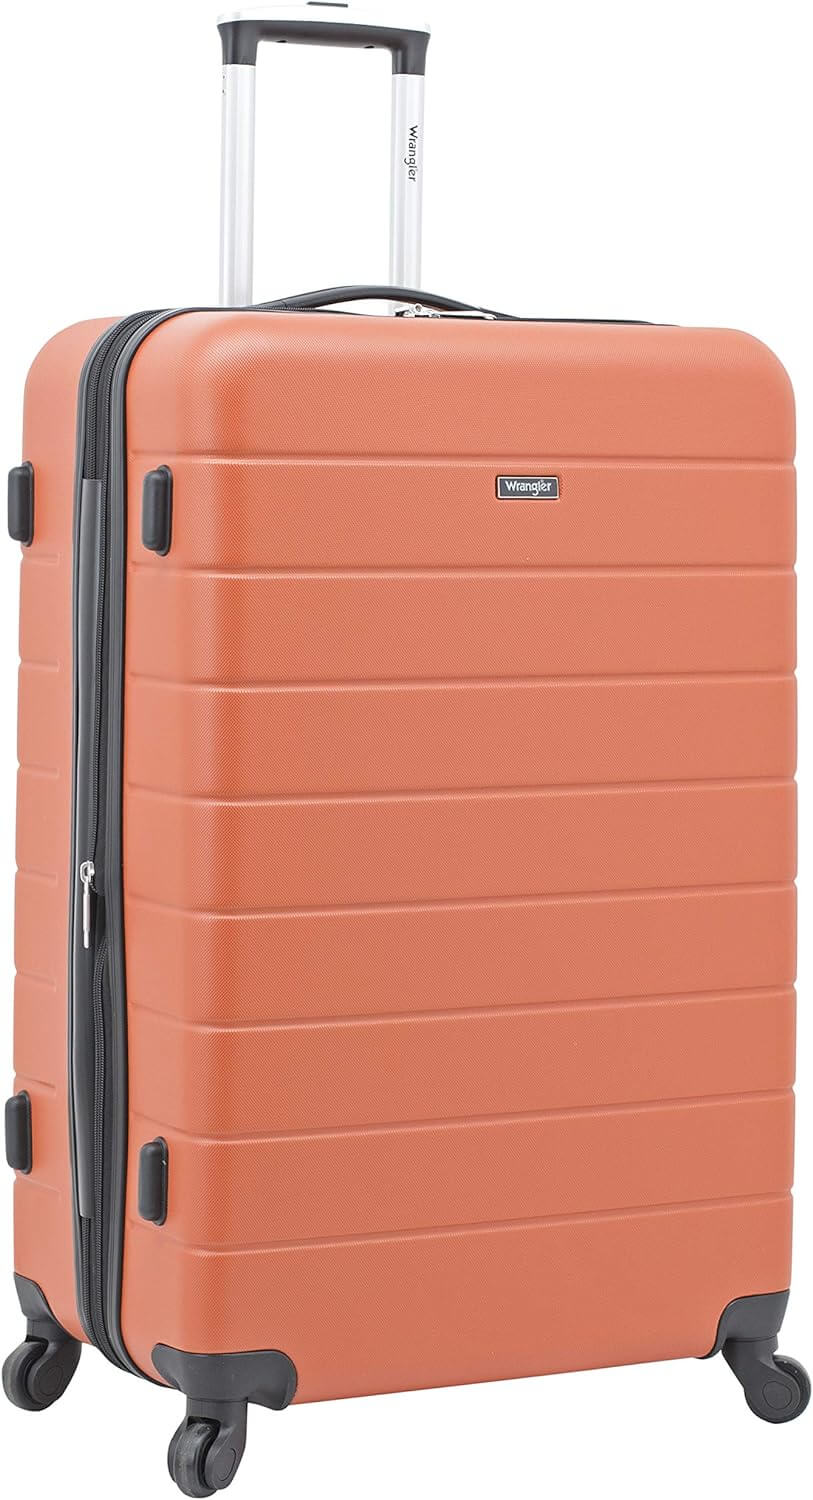 Wrangler Smart Luggage 20" Carry-On